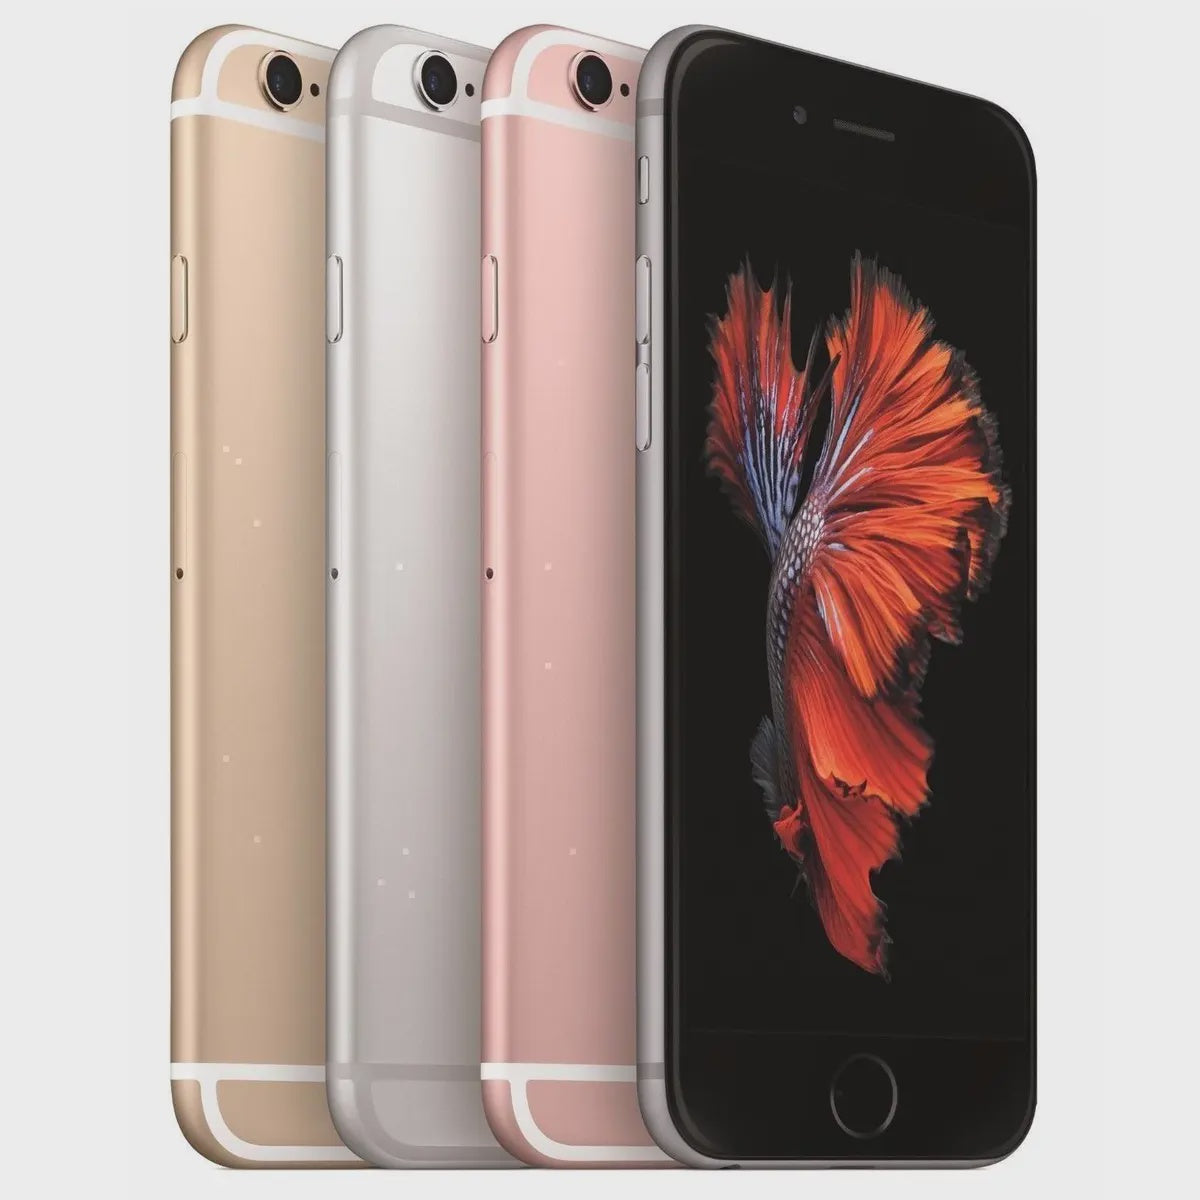 Apple iPhone 6S Plus 5.5" | A1687 | Unlocked